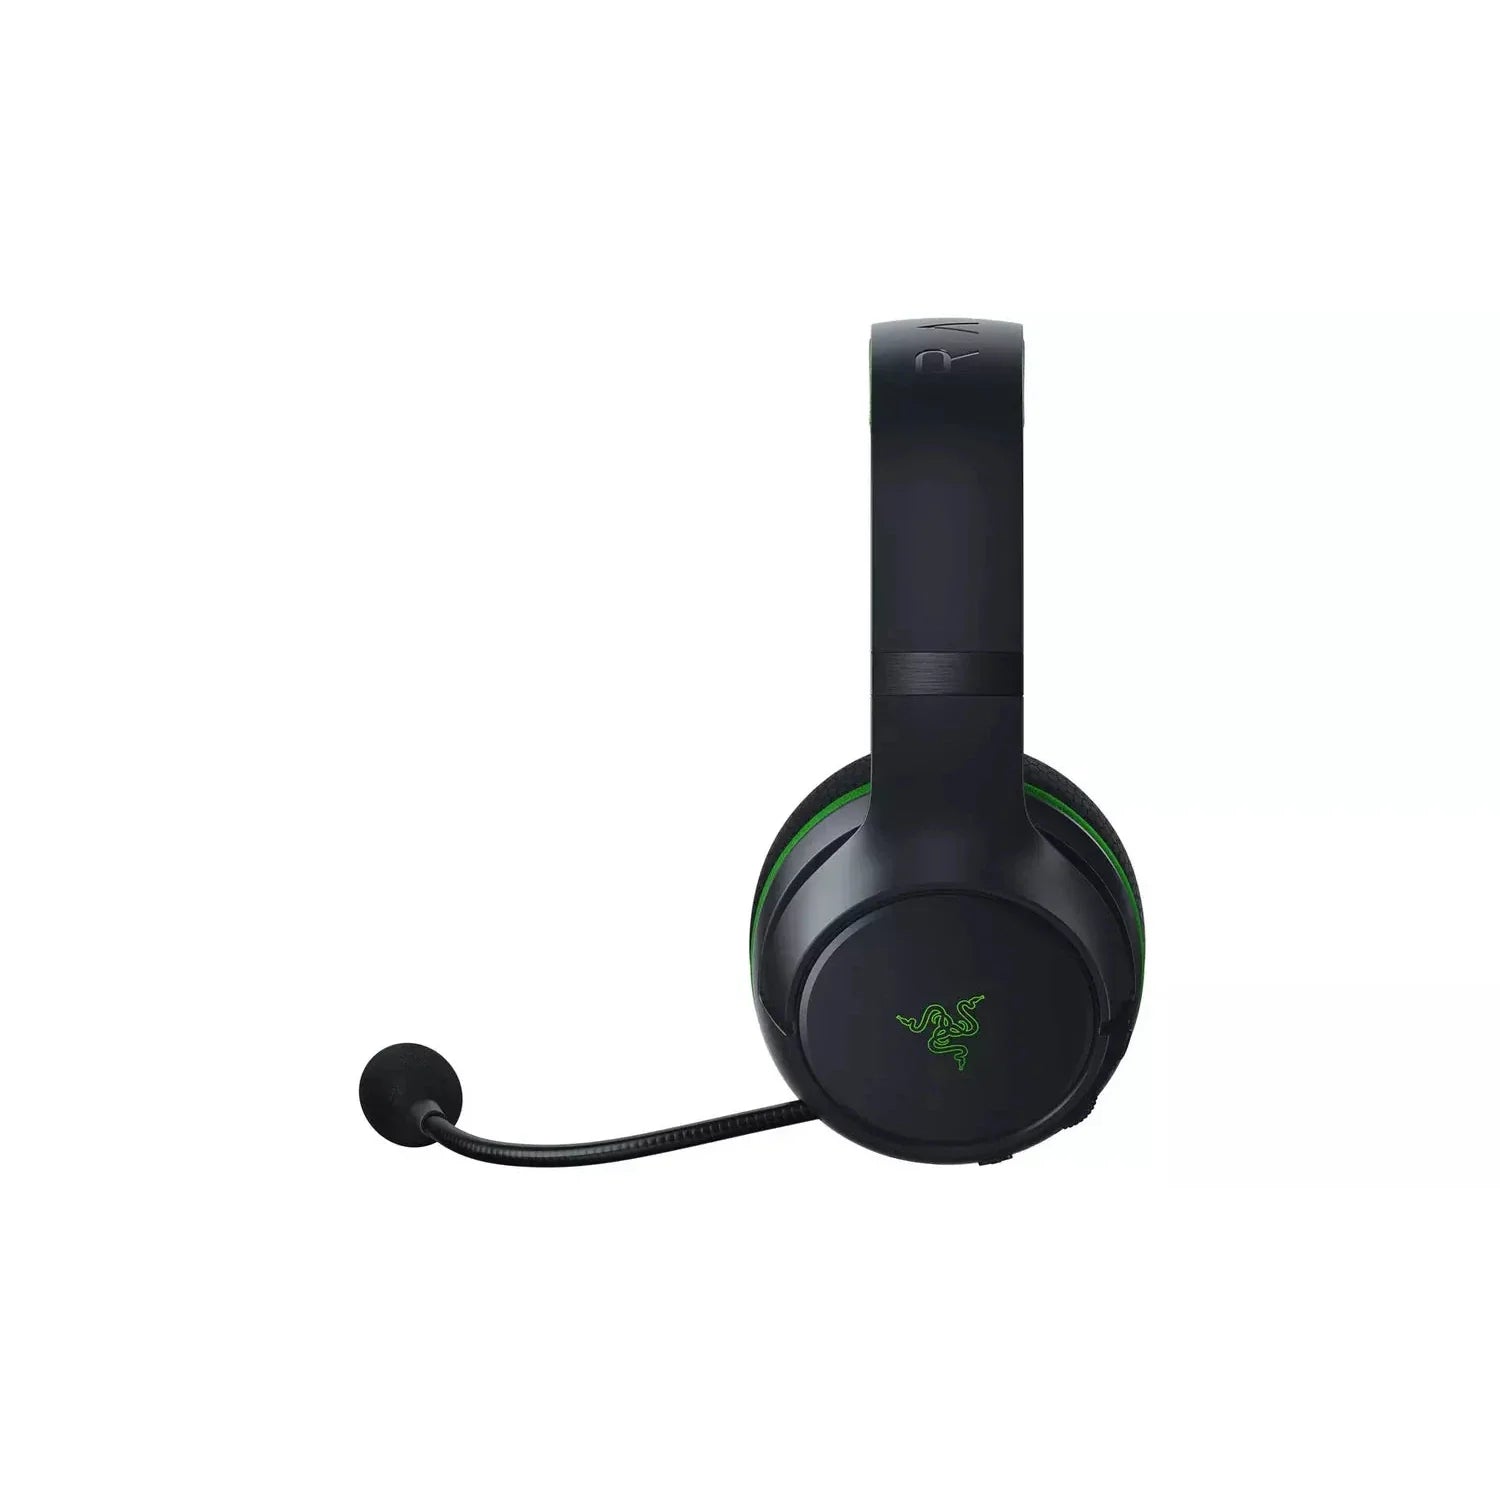 Razer Kaira Xbox Gaming Wireless Headset - Black